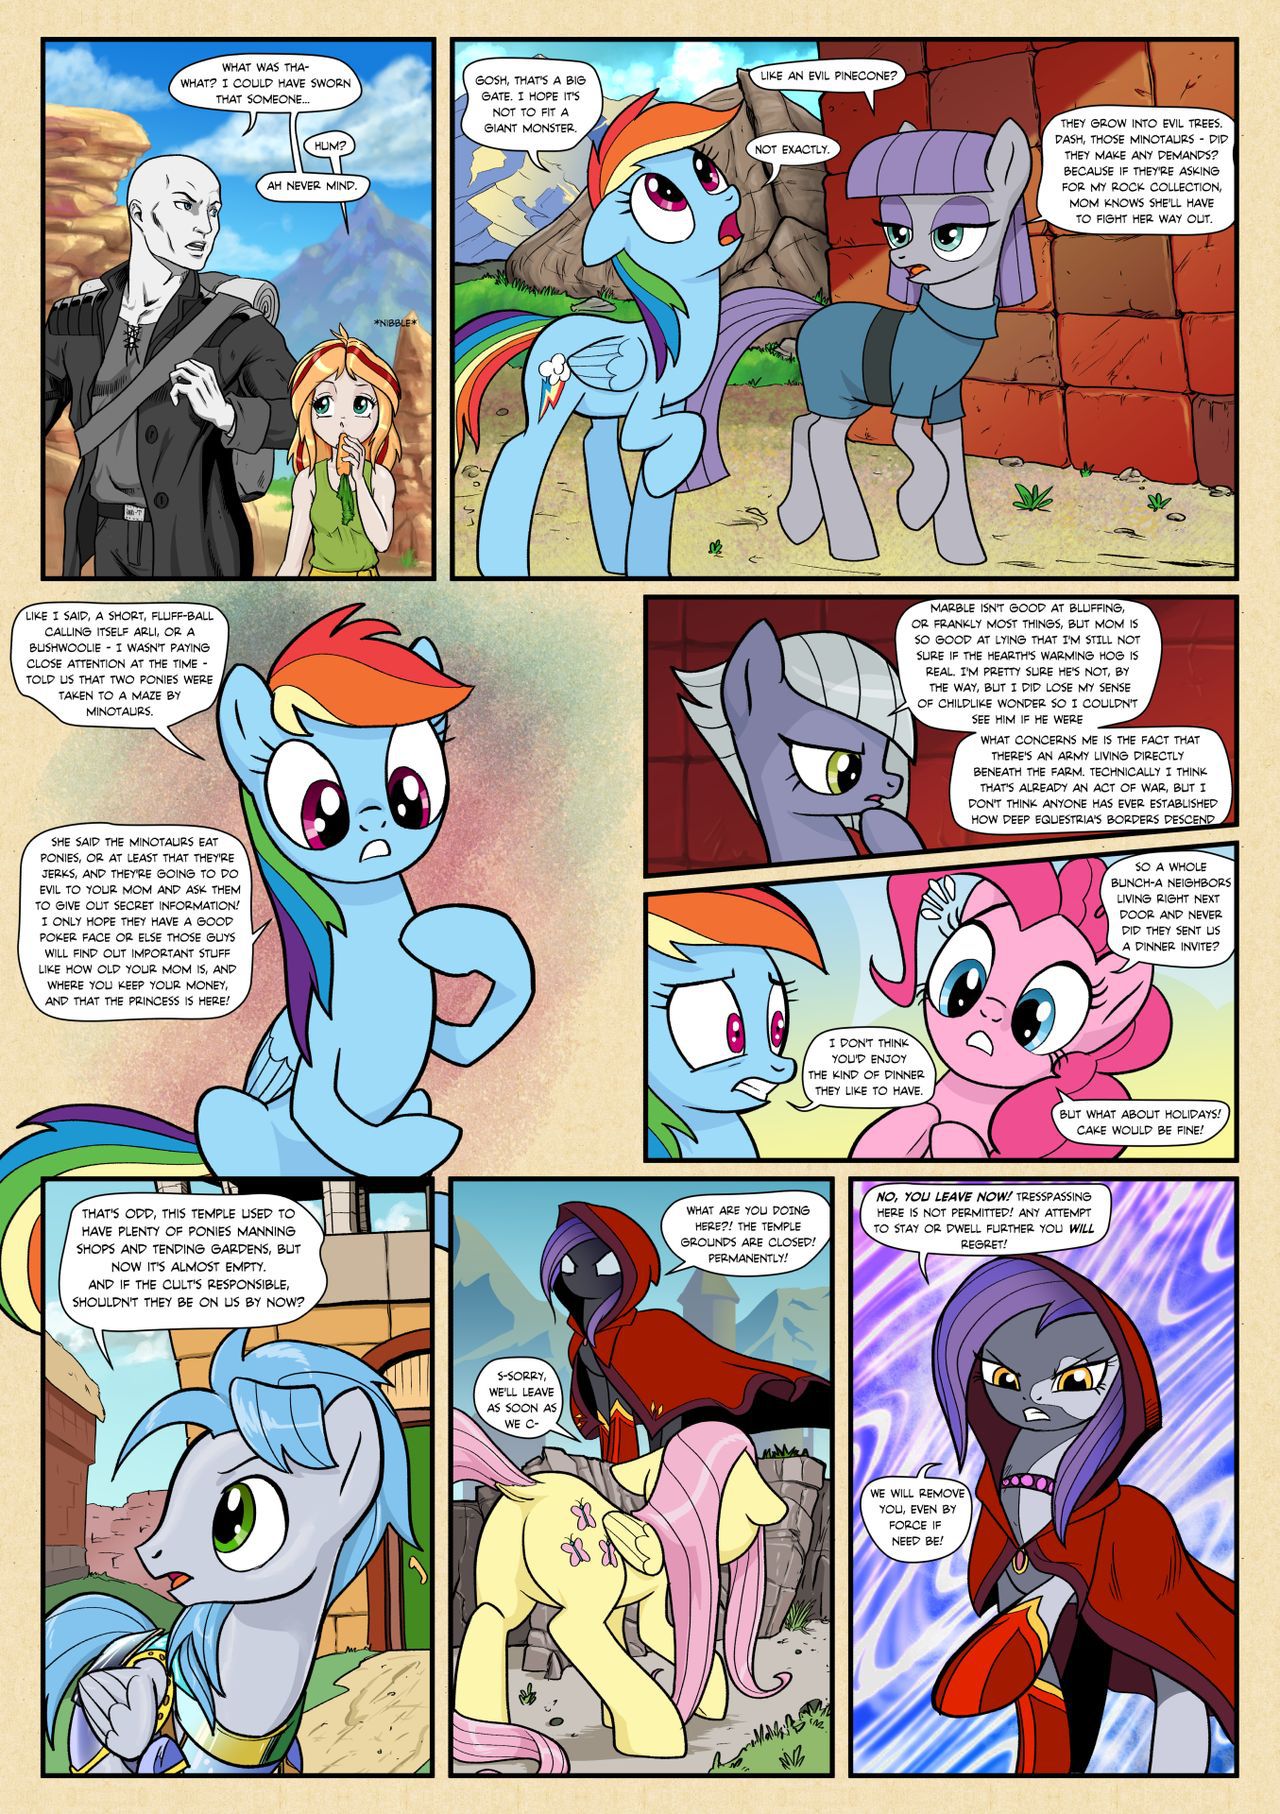 [Pencils] Anon's Pie Adventures (My Little Pony: Friendship is Magic) [In-Progress] 229